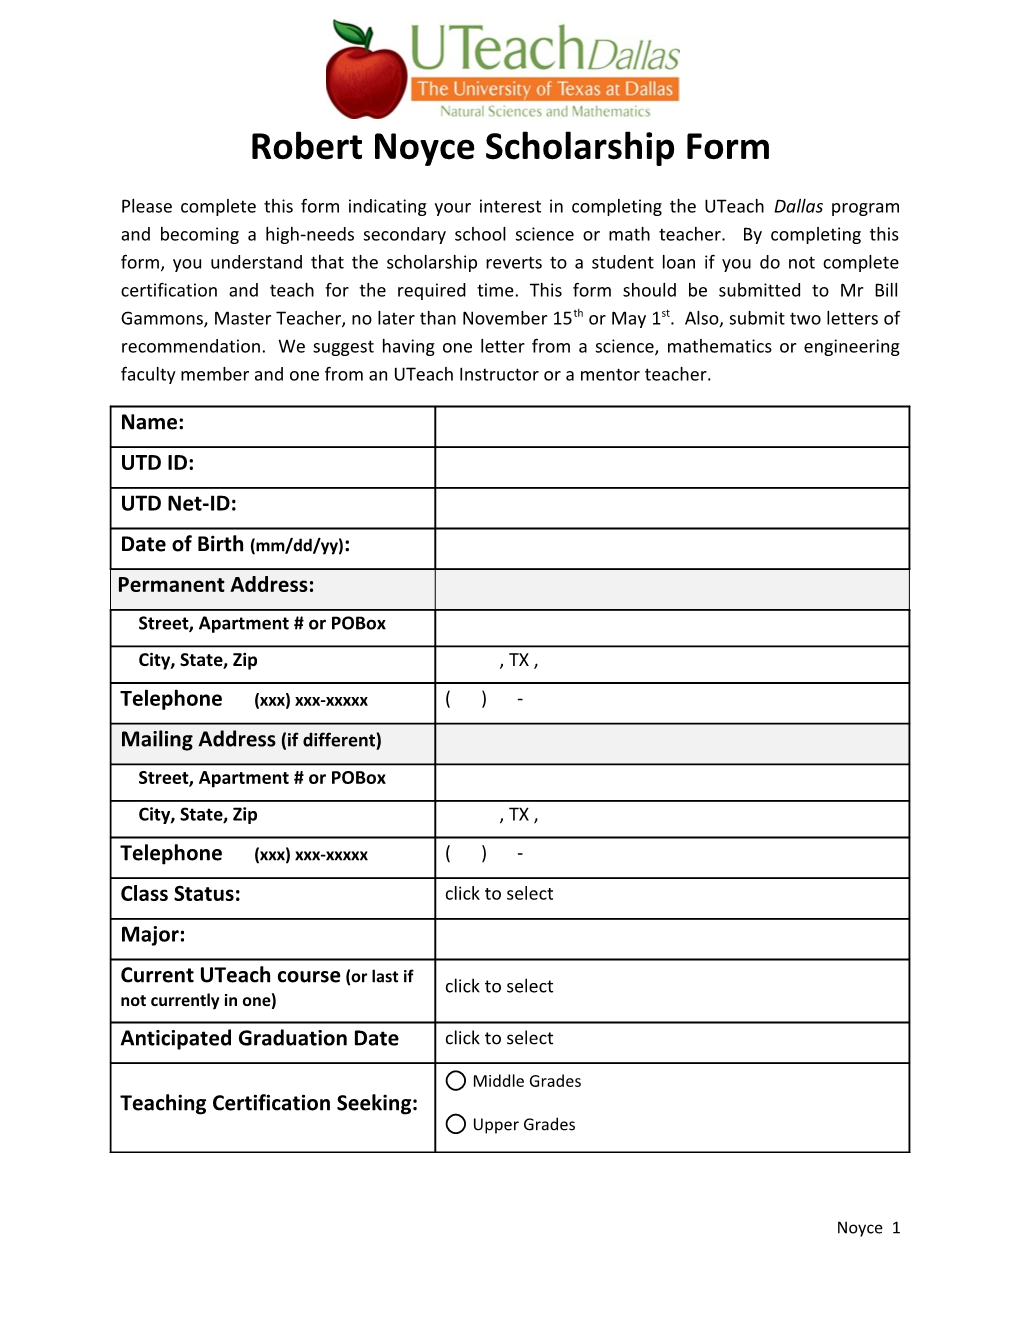 Robert Noyce Scholarship Form